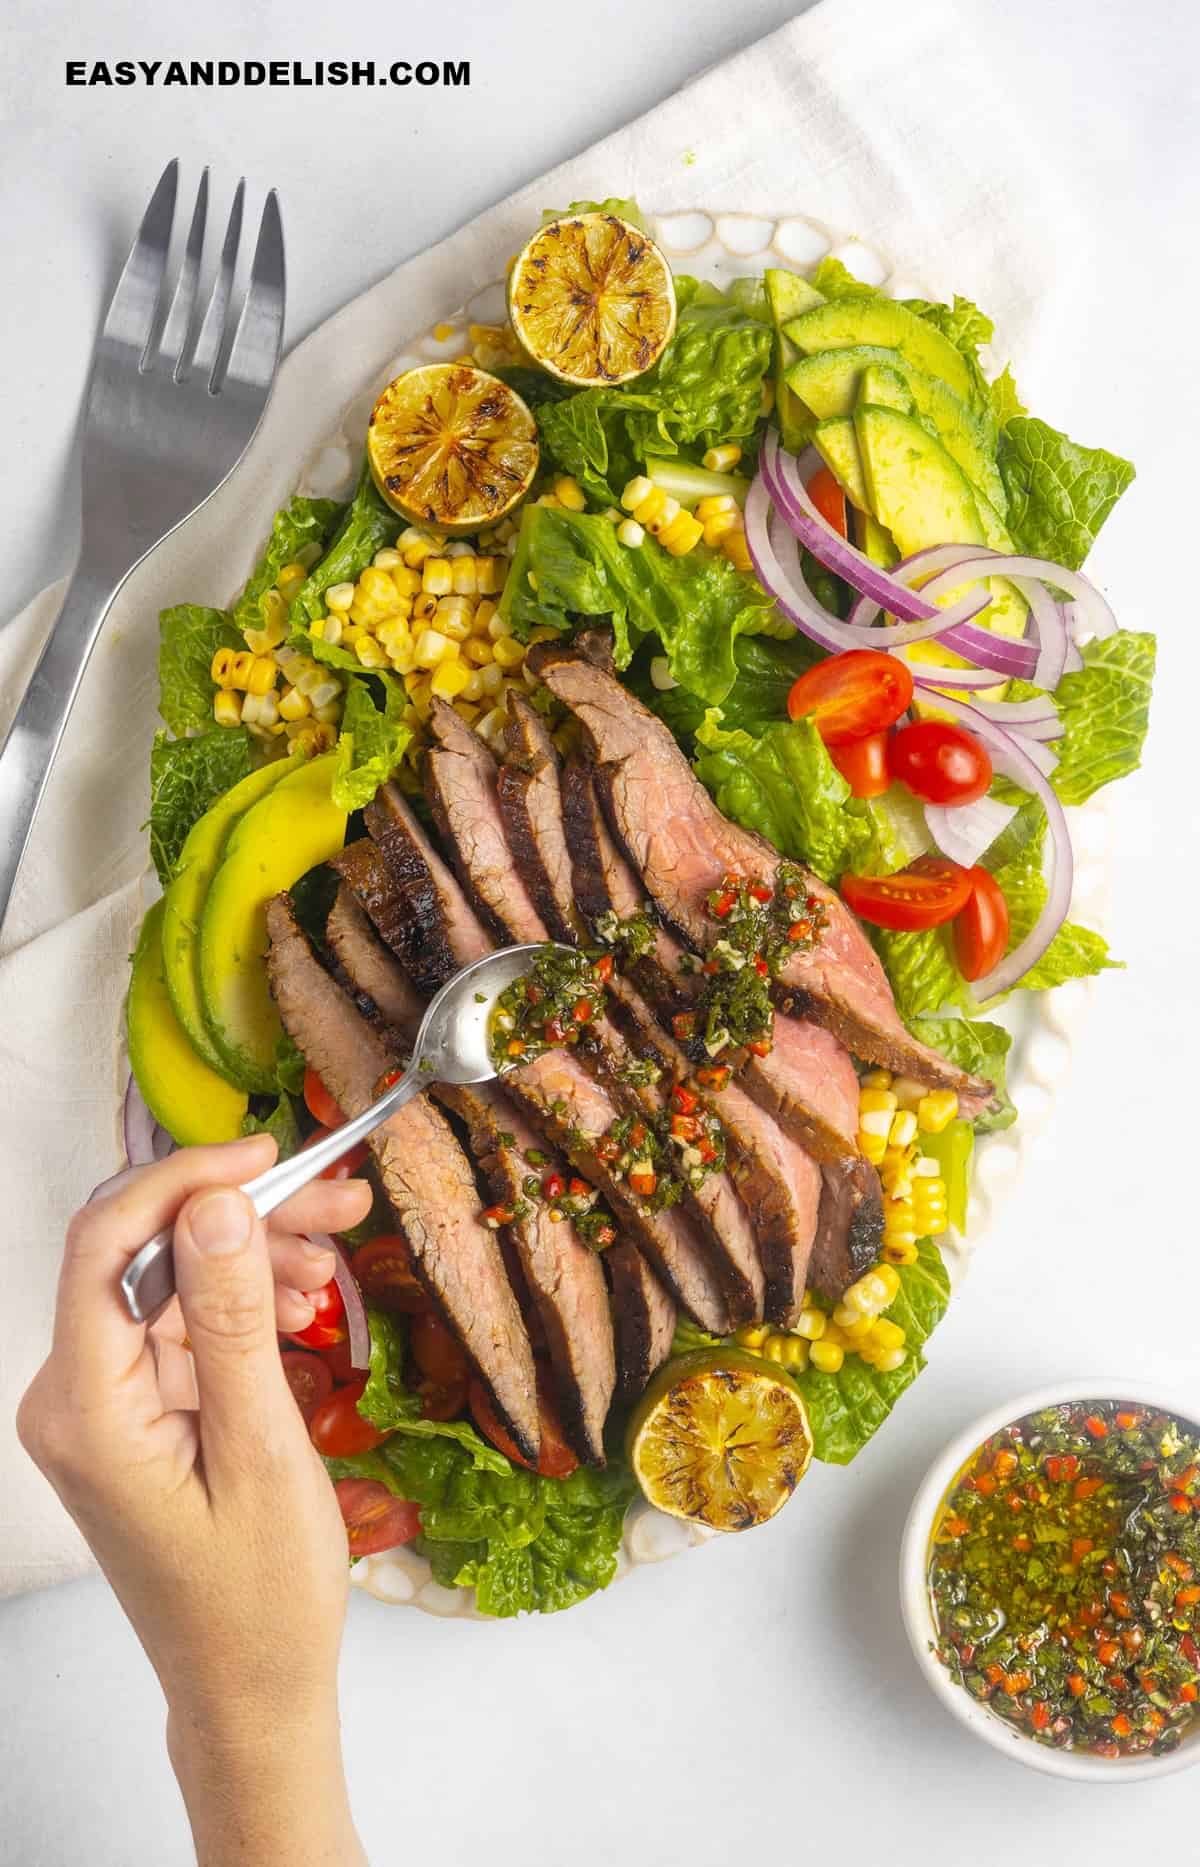 chimichurri spooned over grilled flank steak salad.